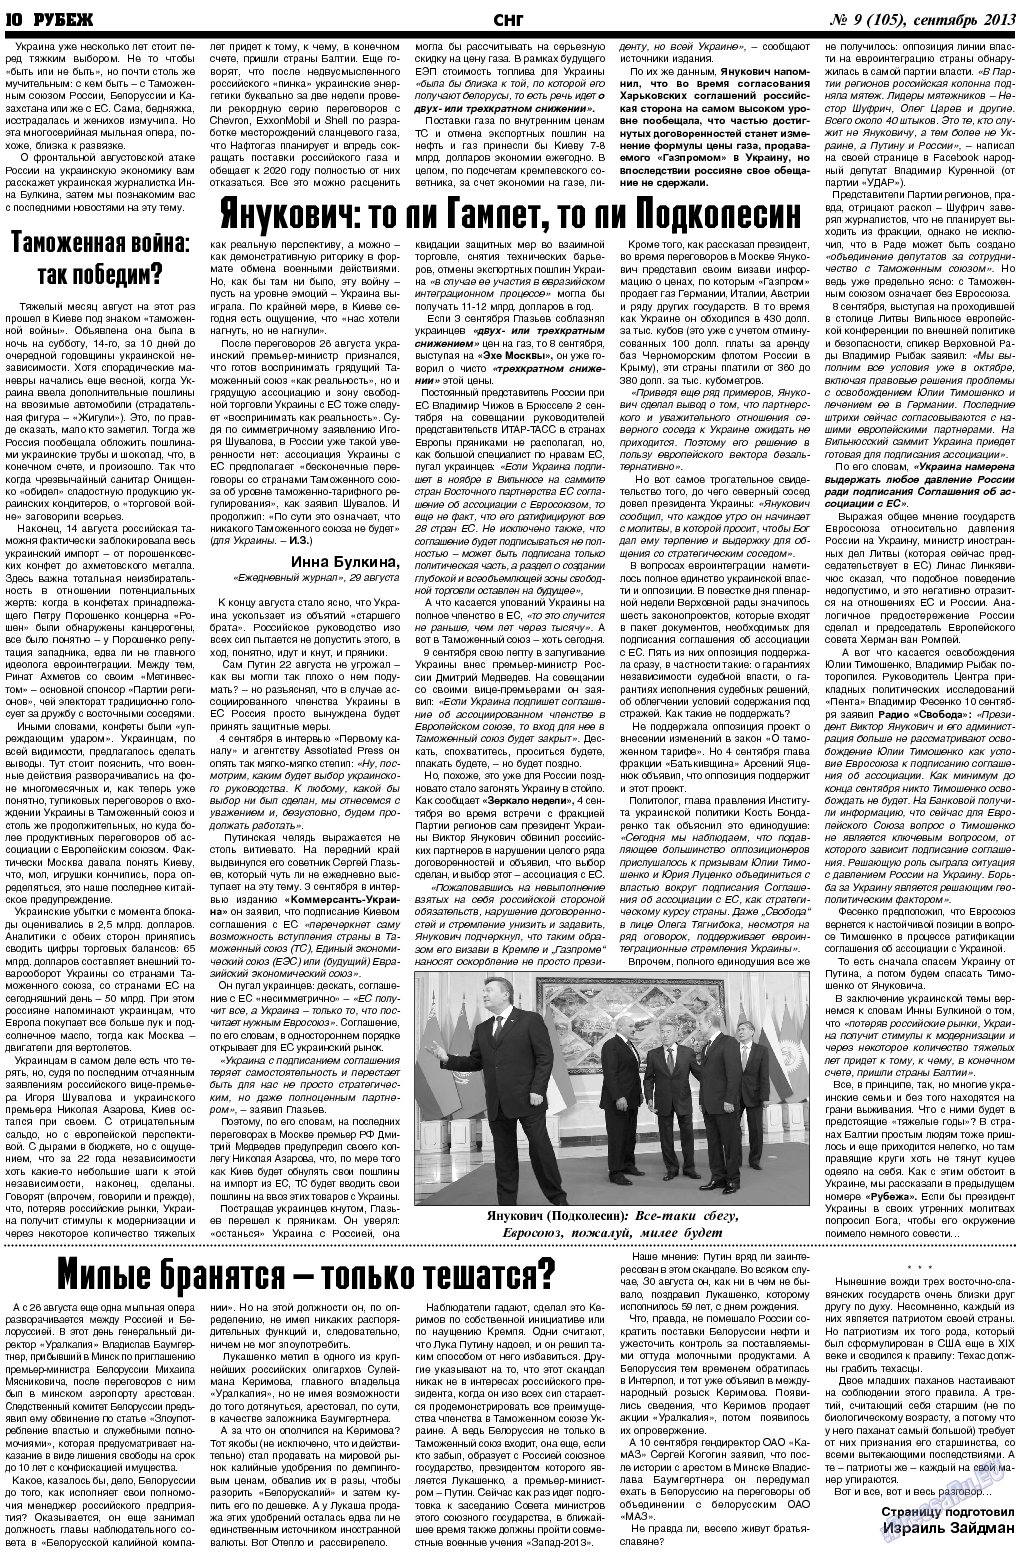 Рубеж, газета. 2013 №9 стр.10